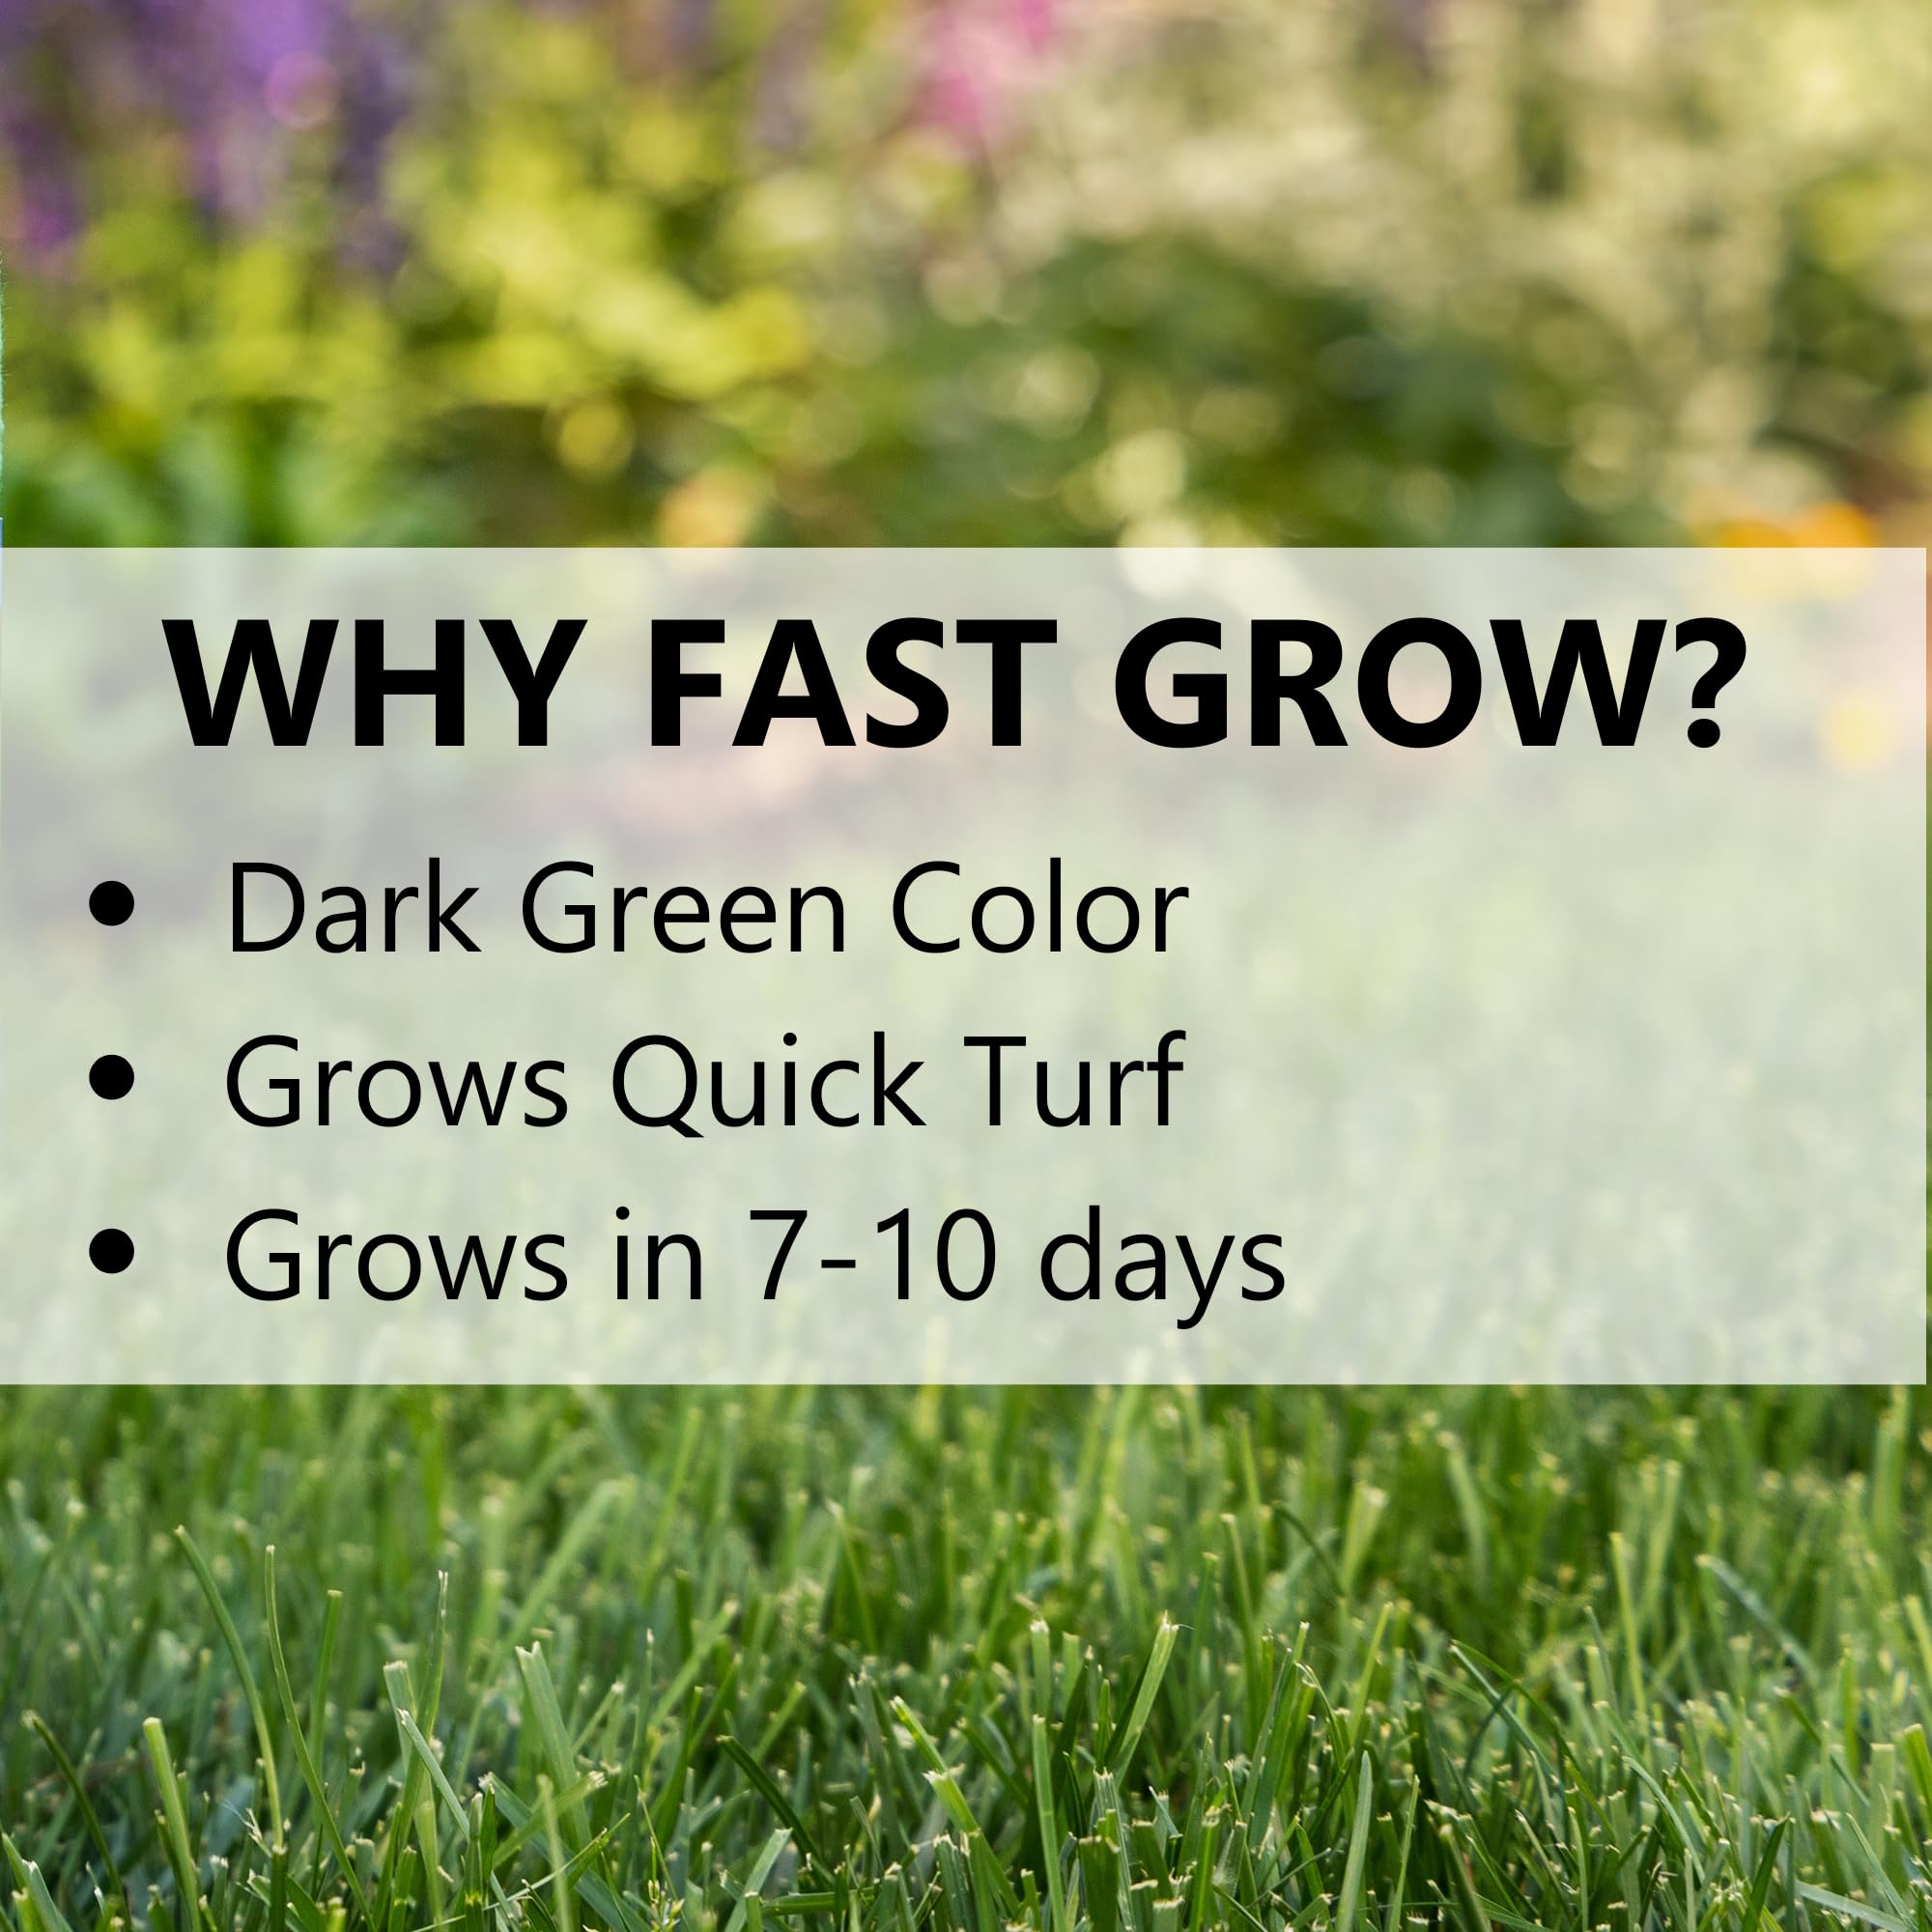 Jonathan Green (10820) Fast Grow Grass Seed - Cool Season Lawn Seed (3 lb)